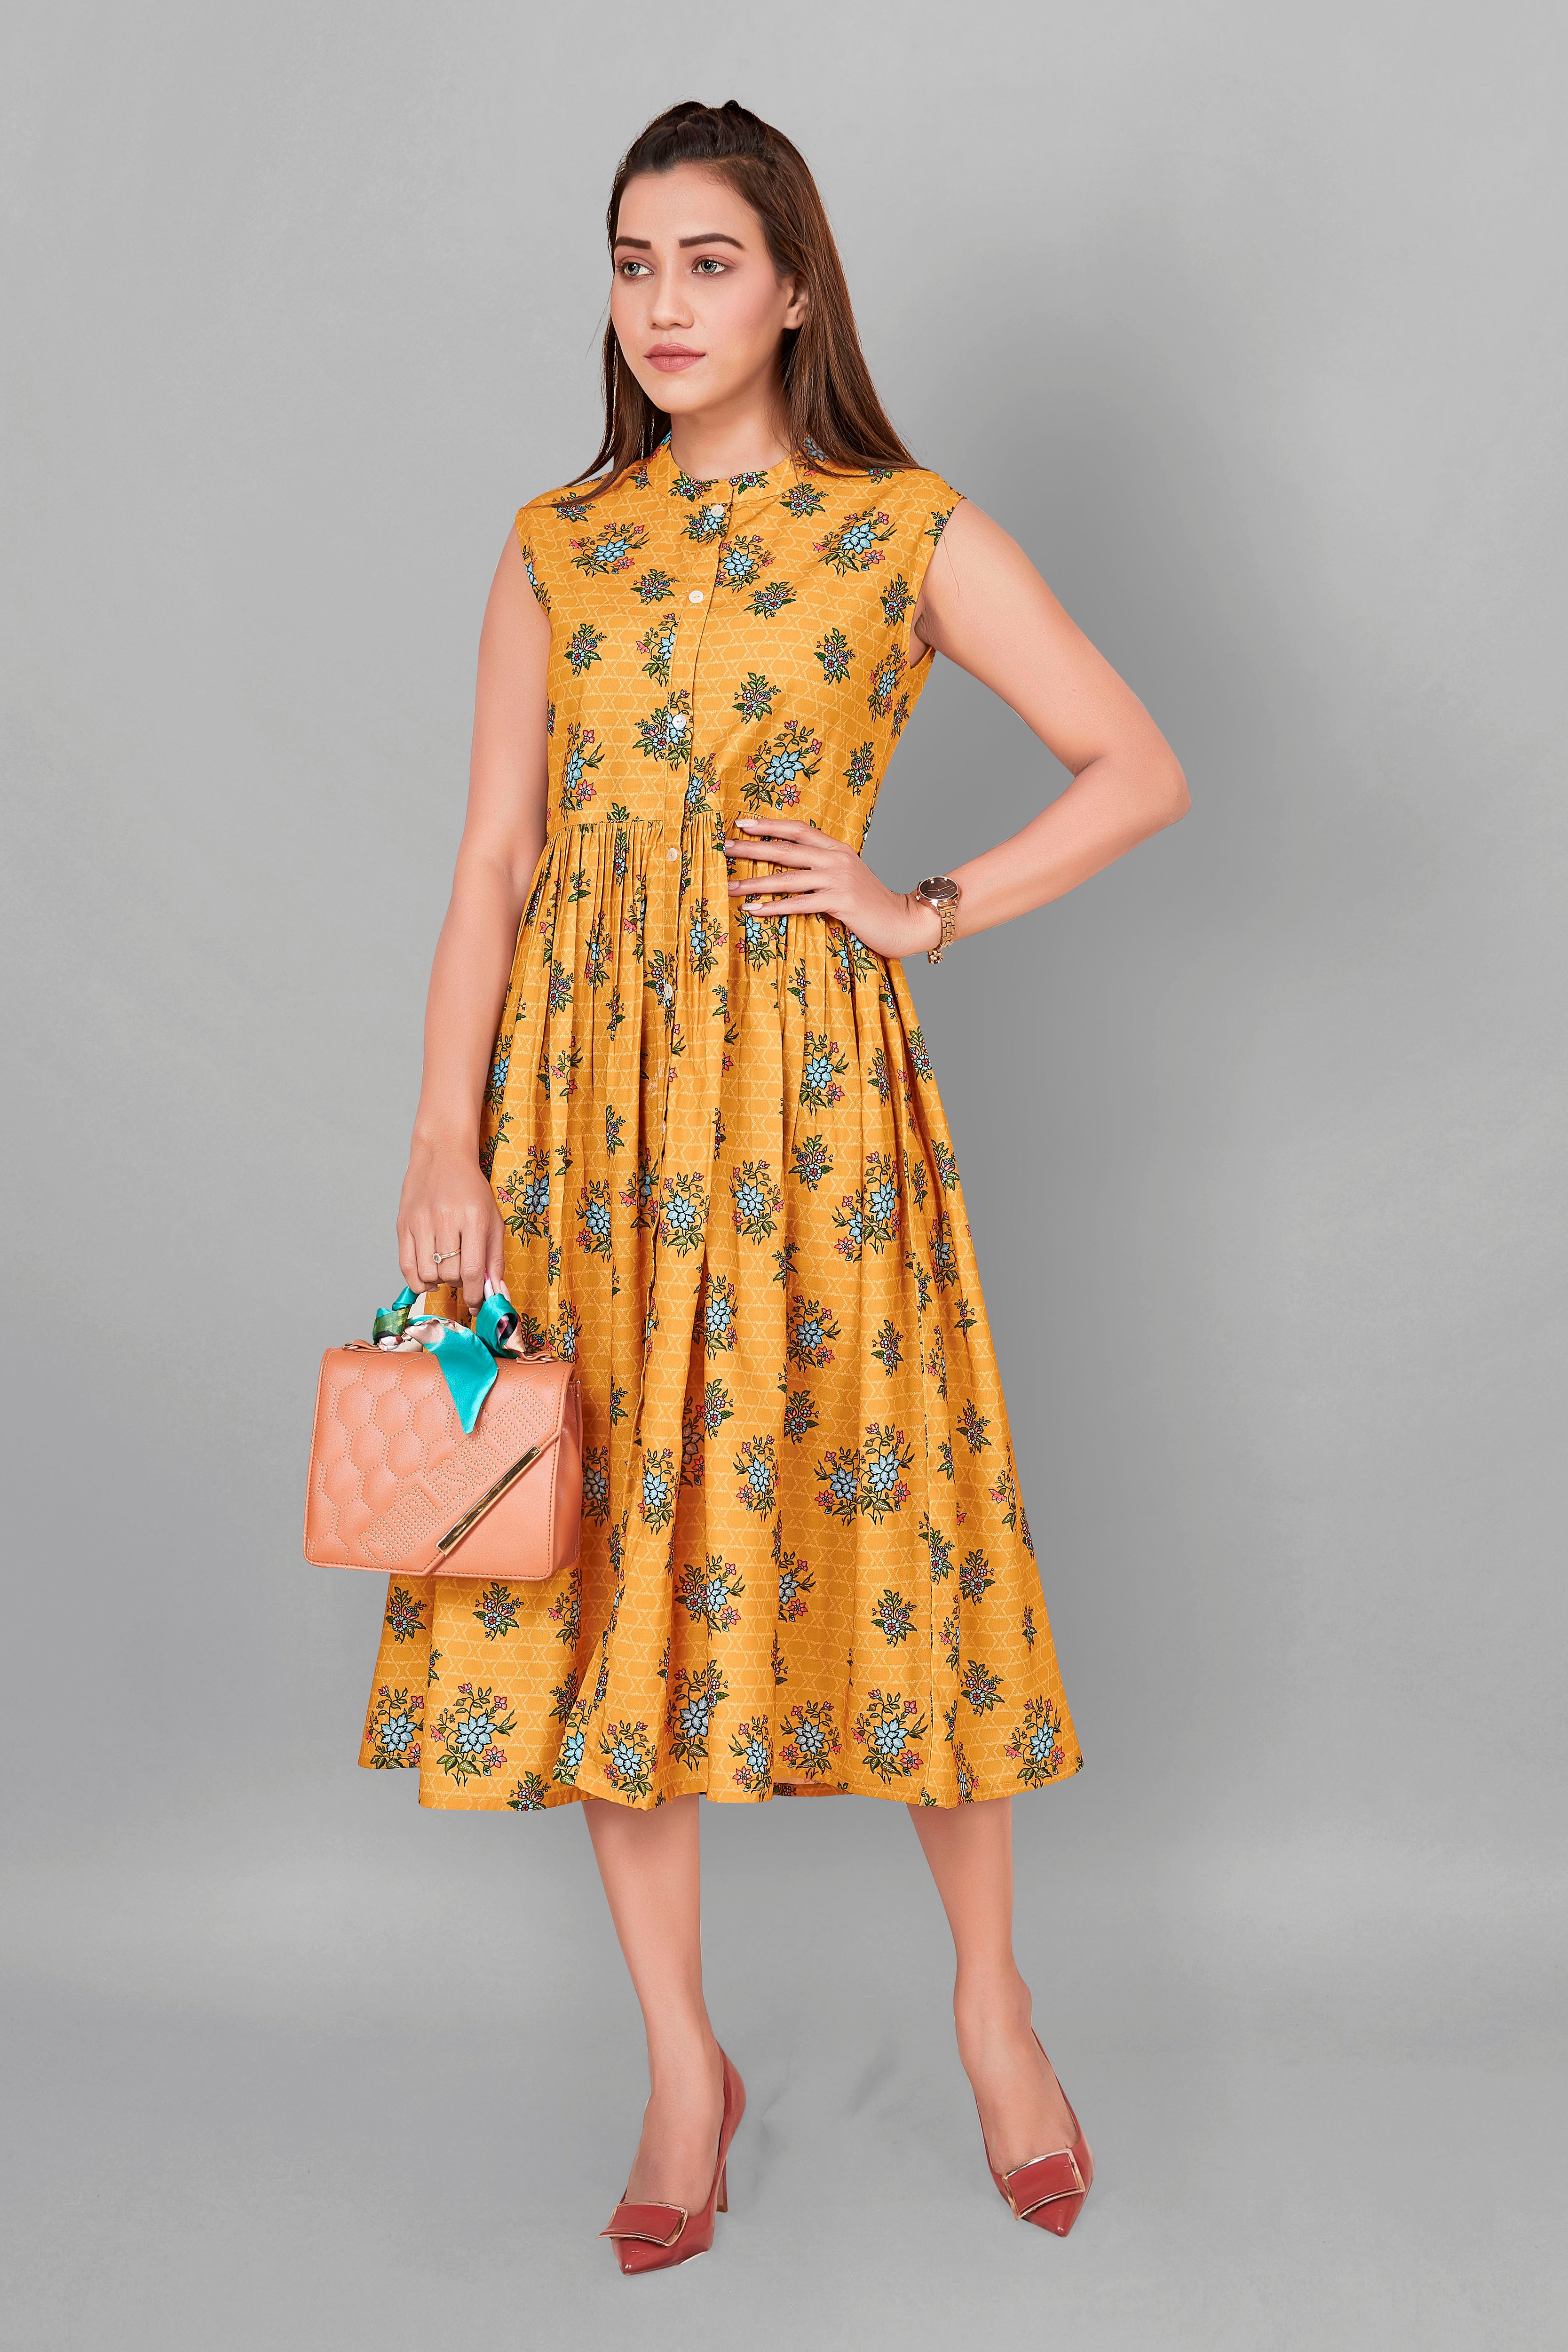 Buy Yellow Chiffon Maxi Dress Online - W for Woman